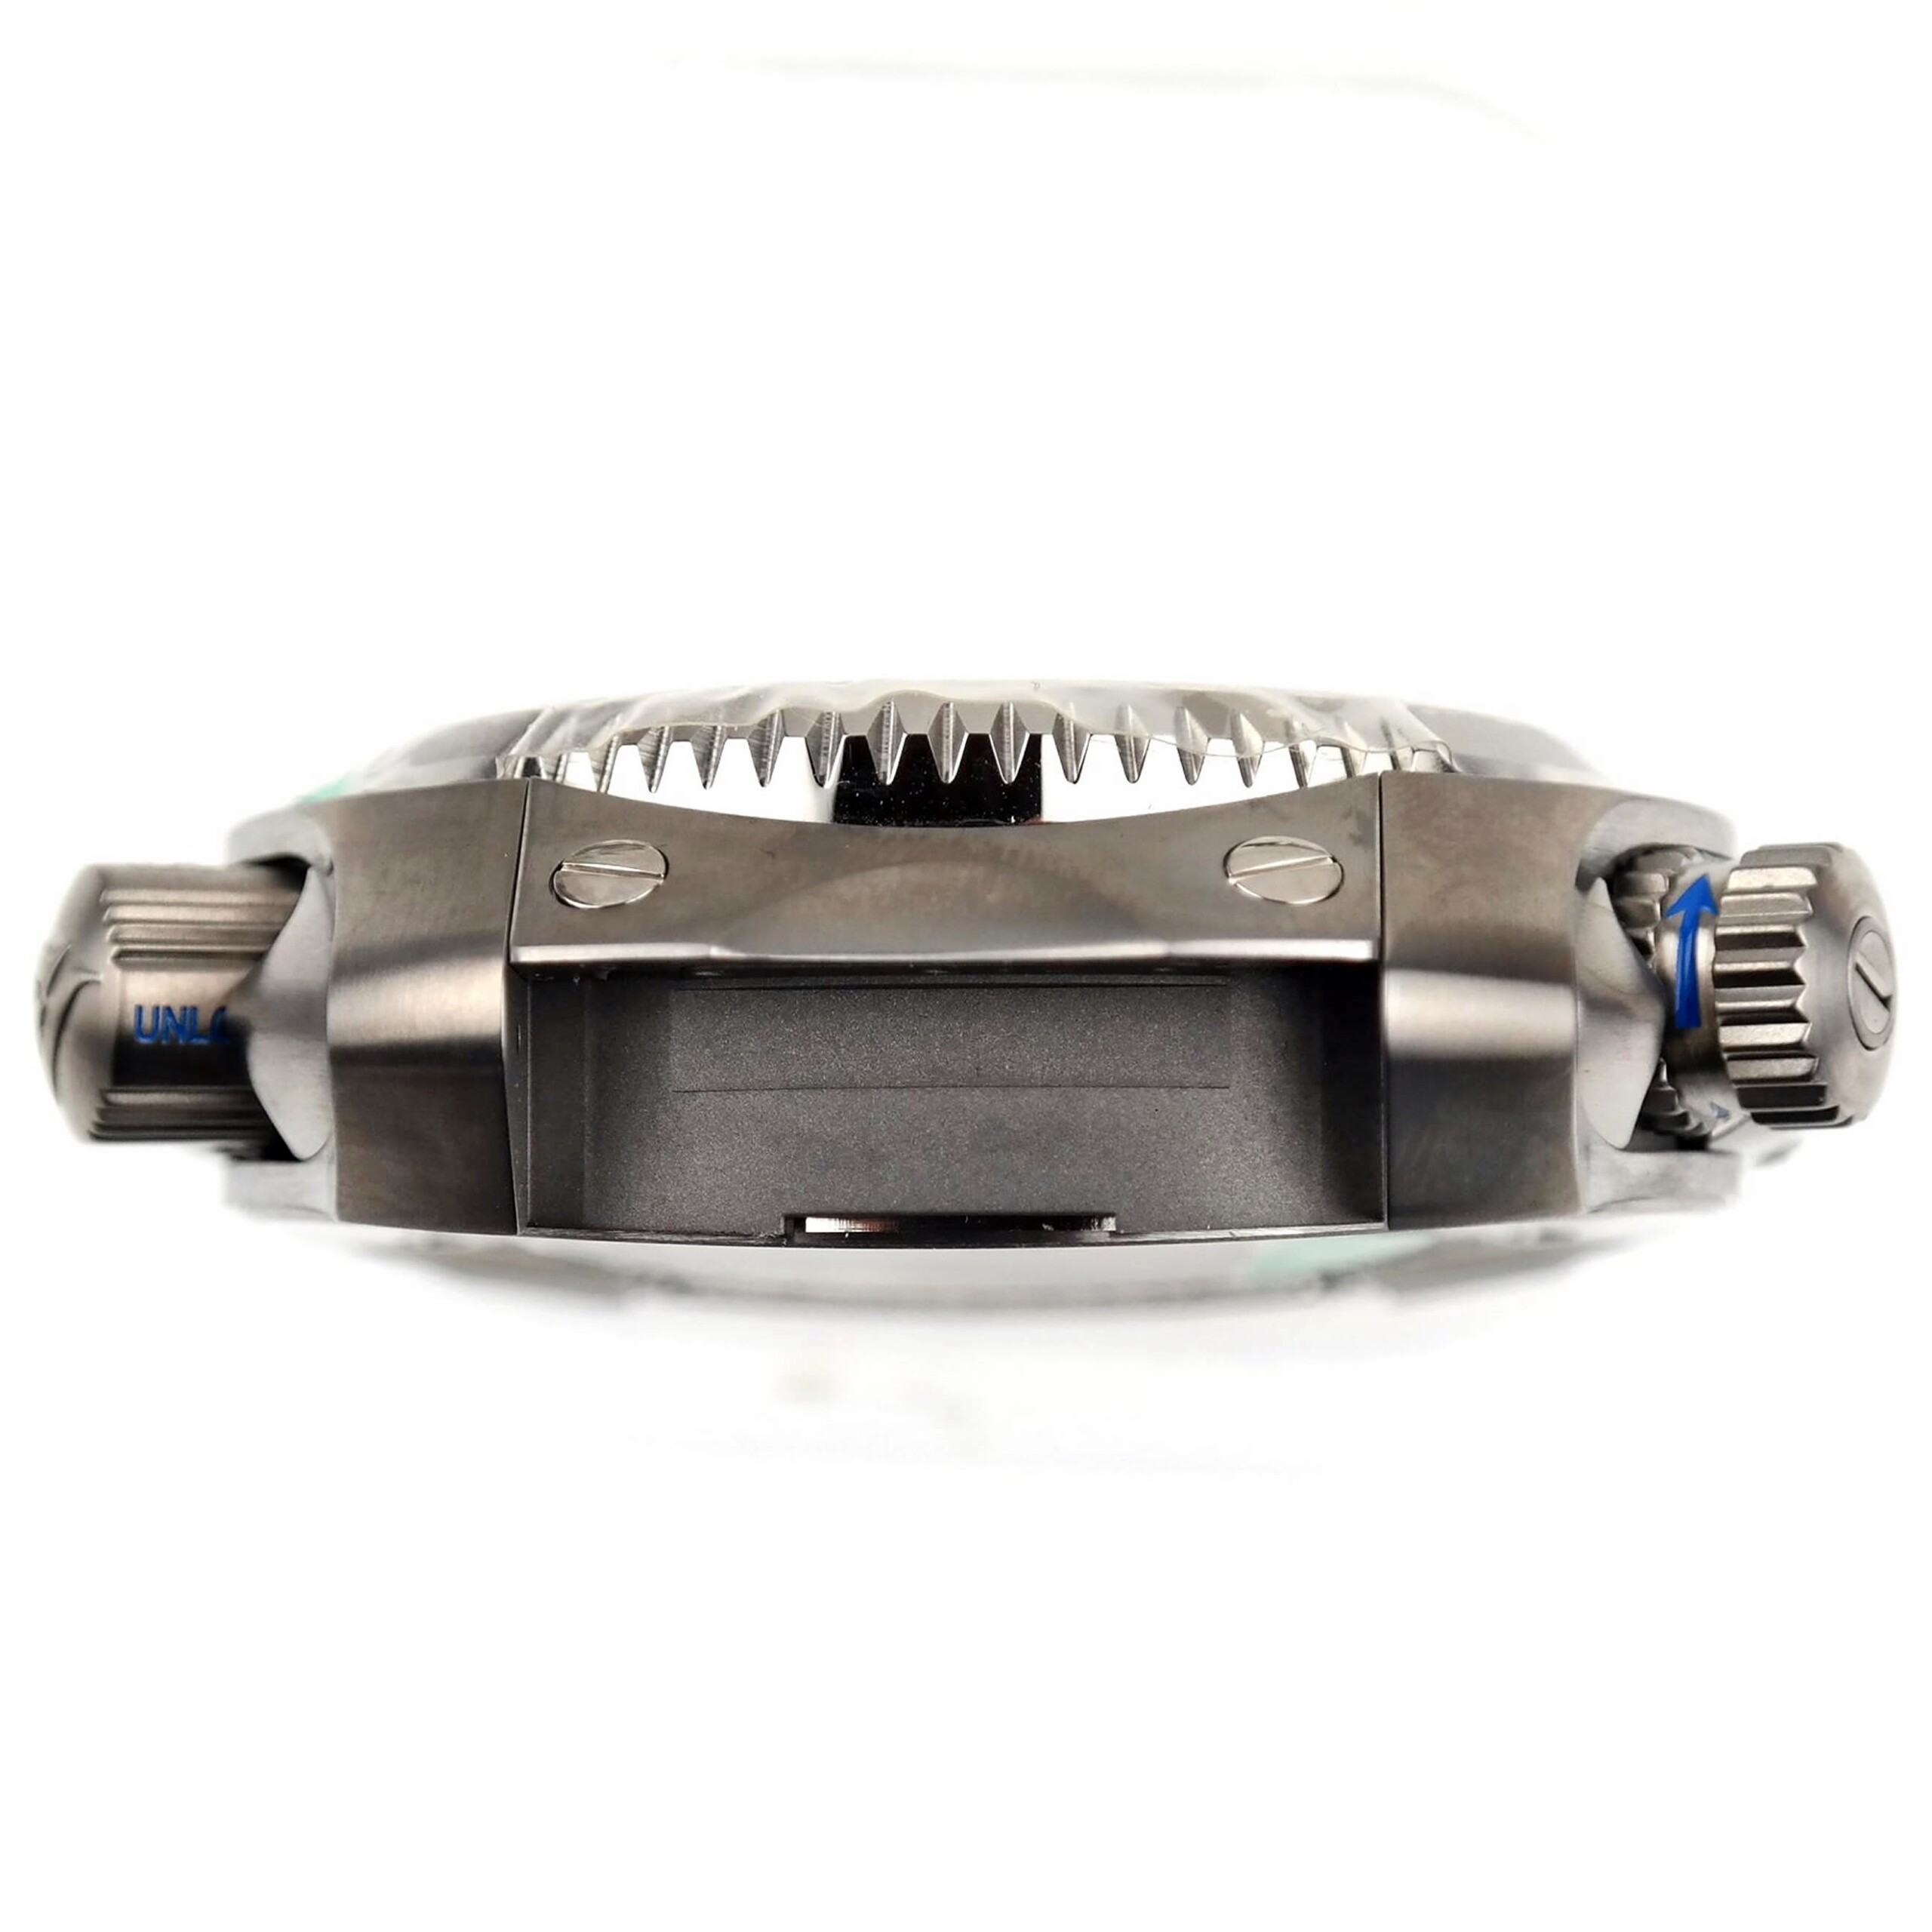 FRANC VILA - Intrepido Diver Superligero FVi 62 - WR 300 m - Original Watch Case